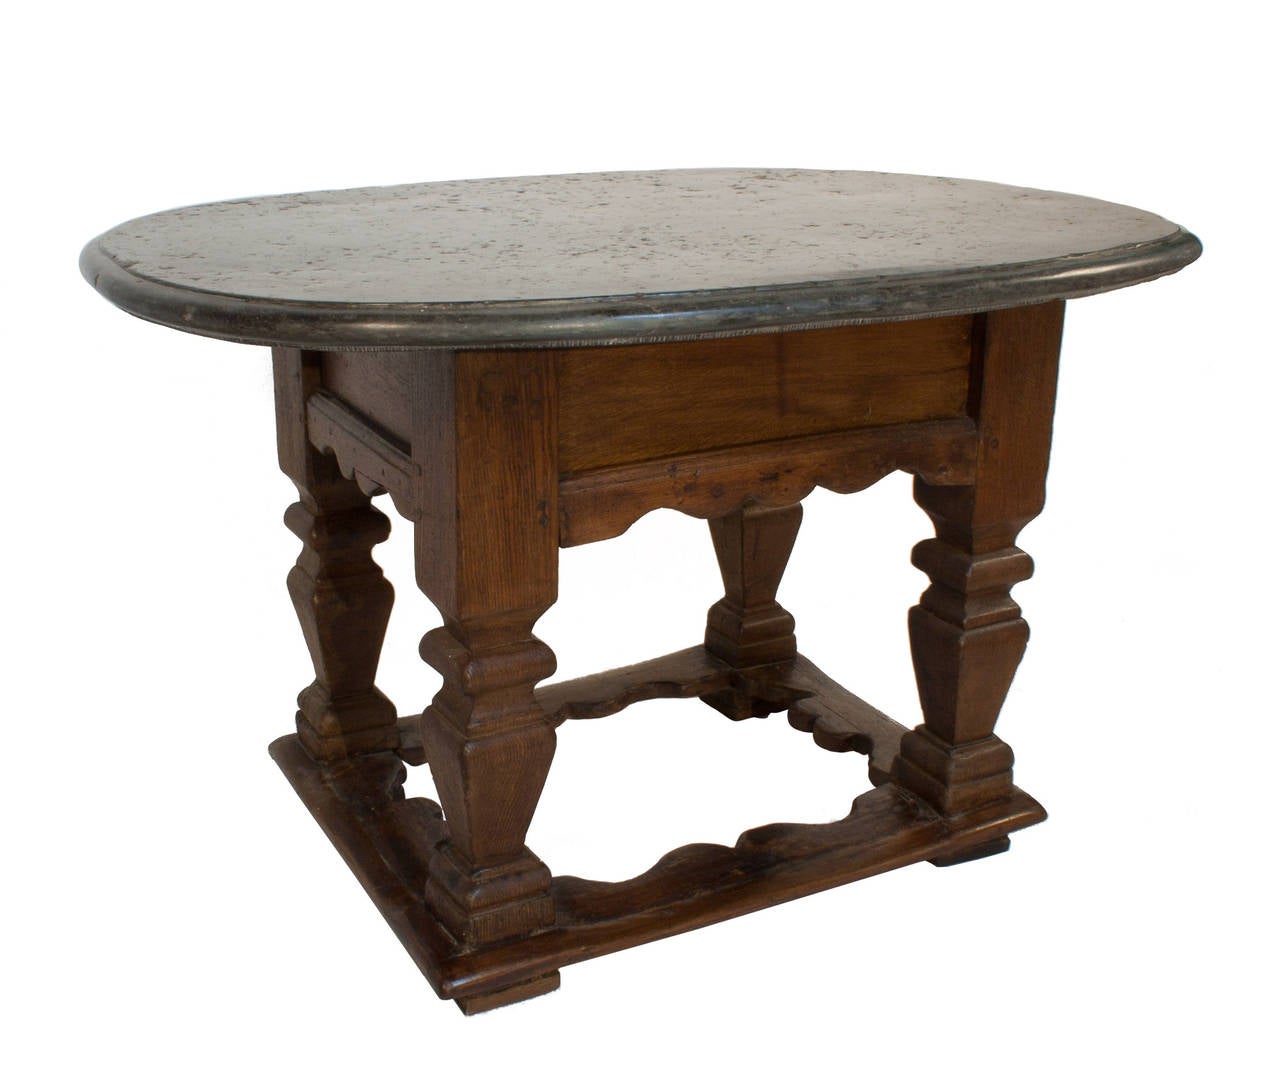 Swedish Baroque Oval Stone-Top Table